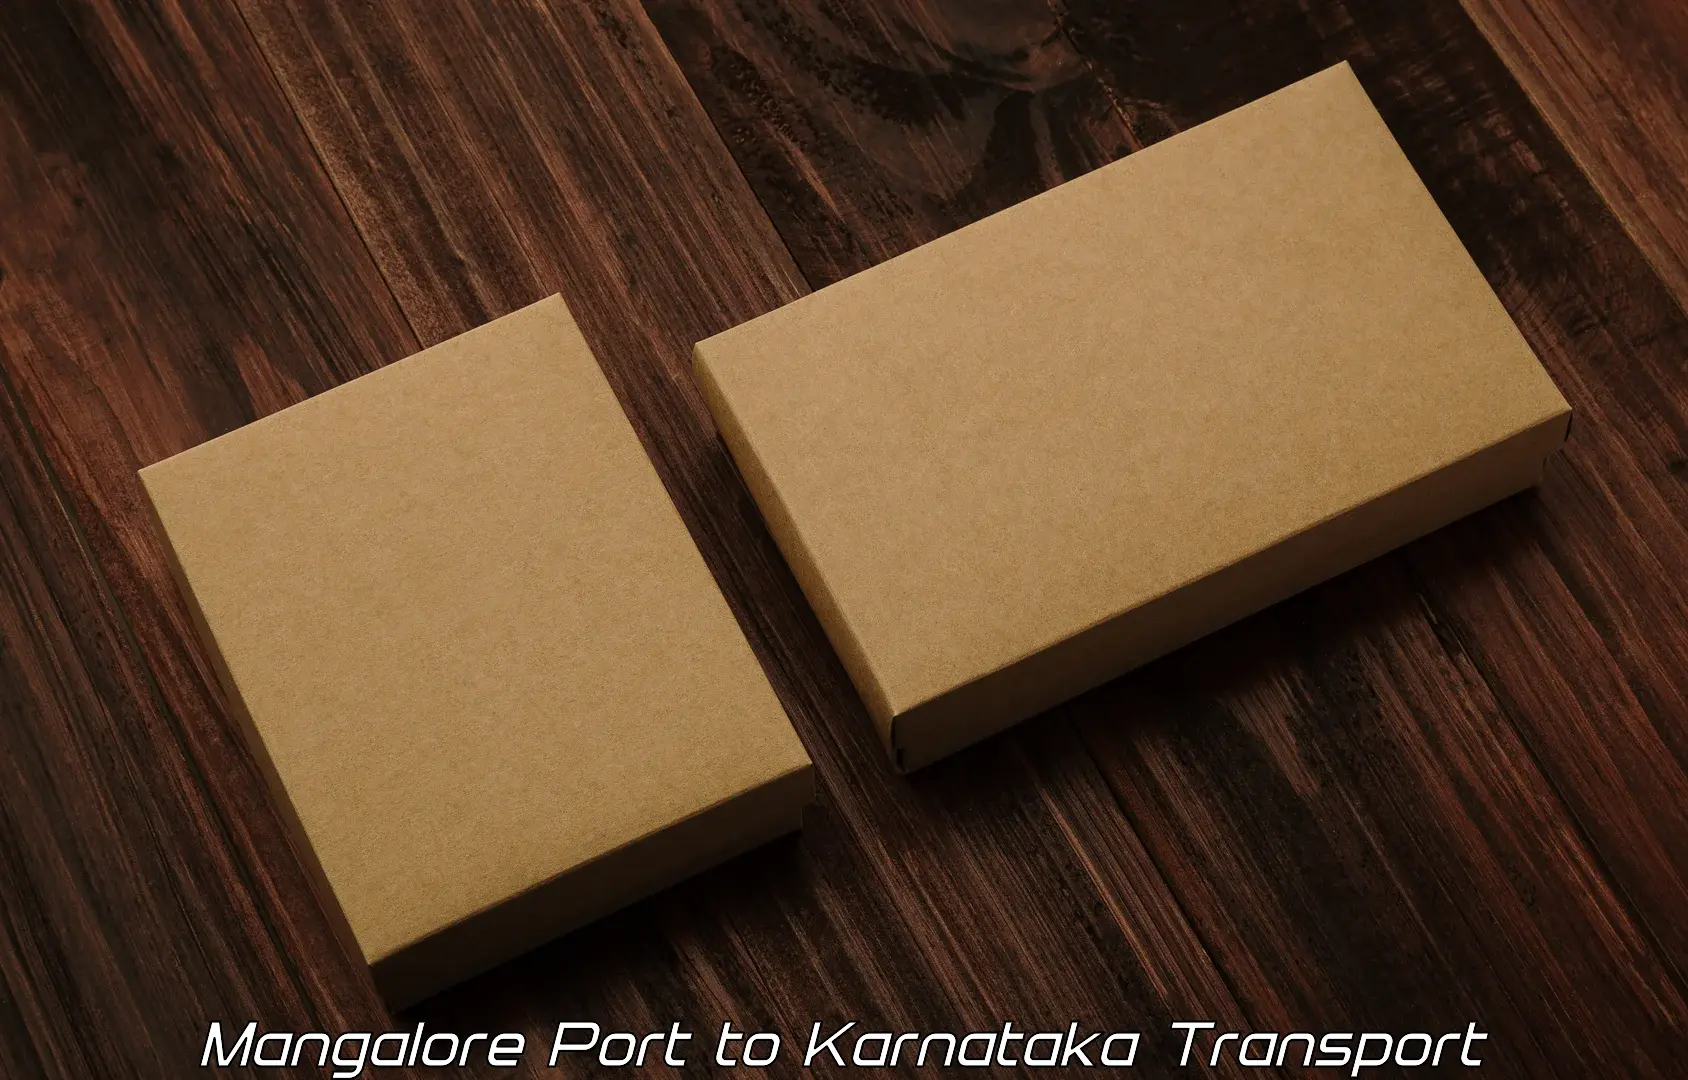 Daily parcel service transport Mangalore Port to Hubli